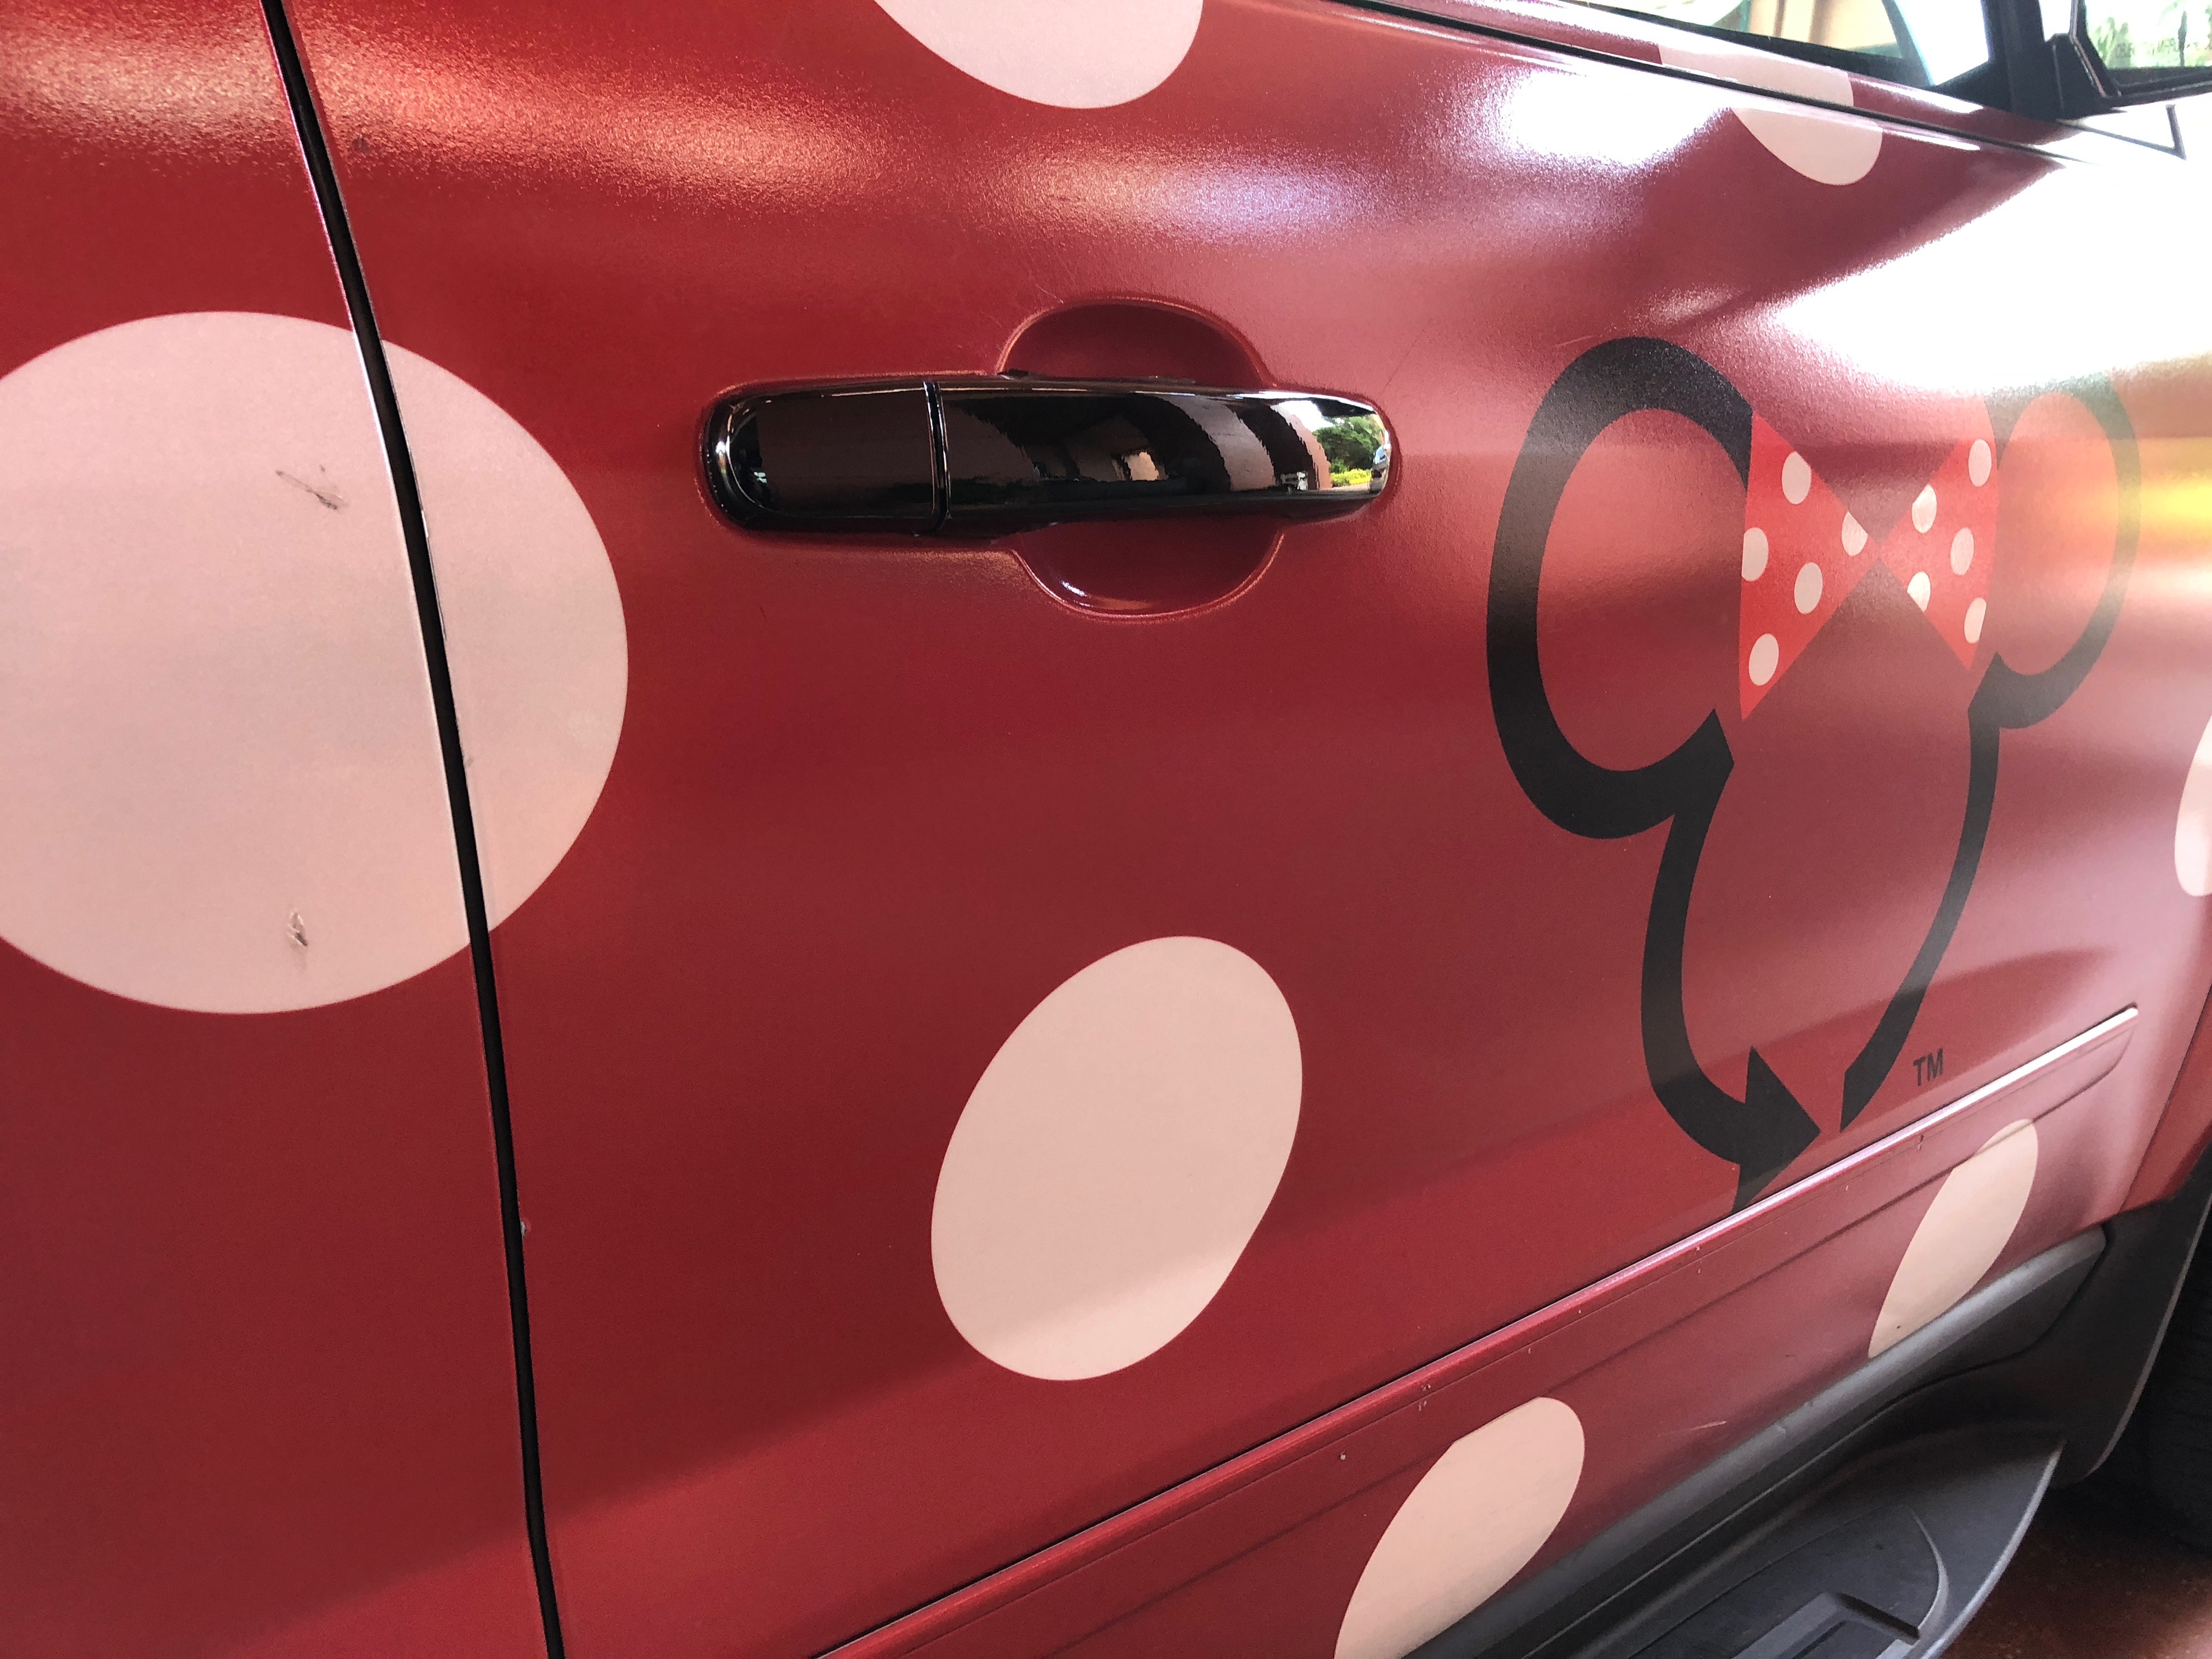 Using Disney World's Minnie Van Service